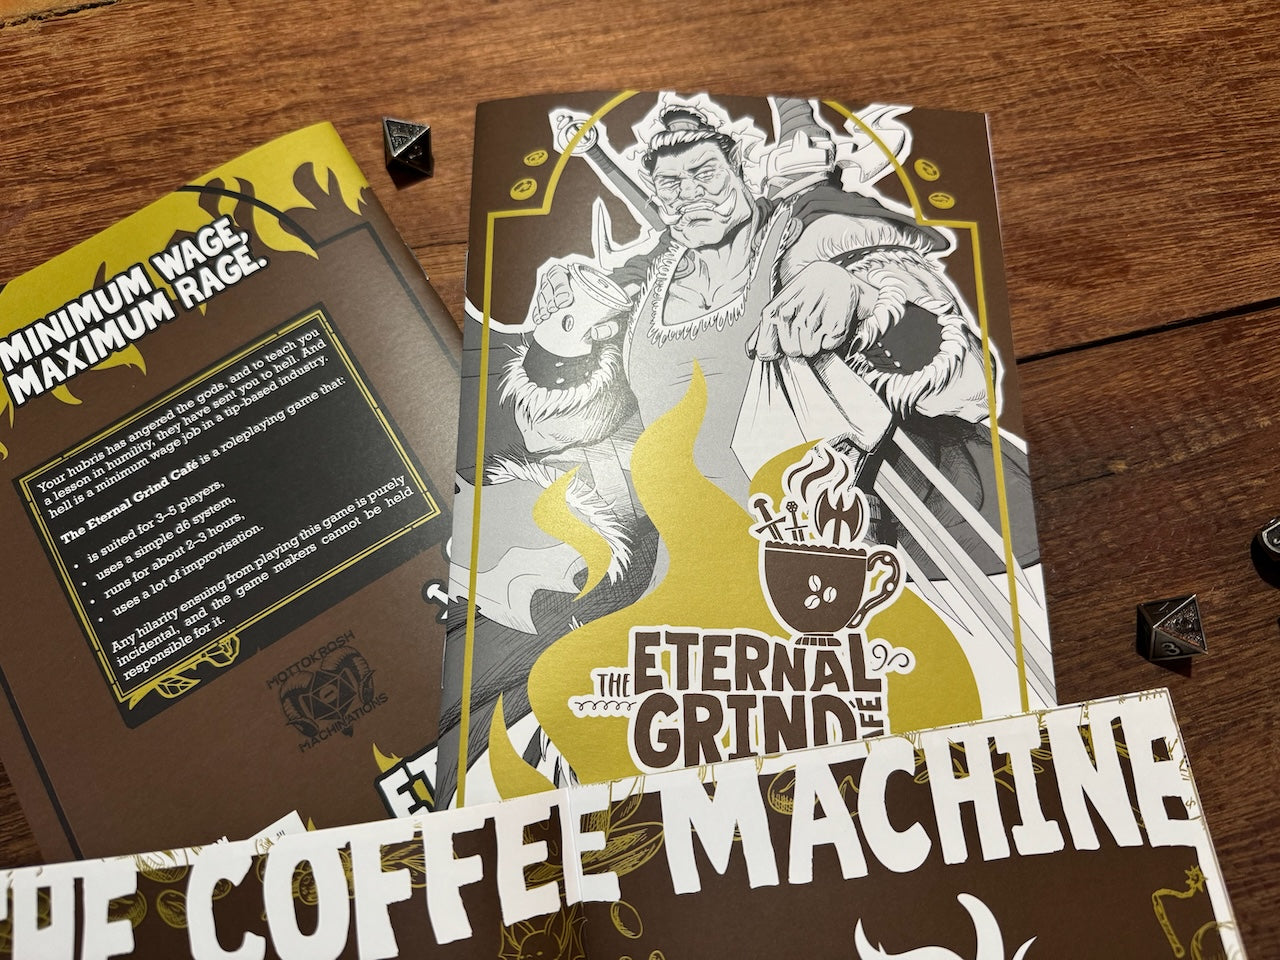 The Eternal Grind Café